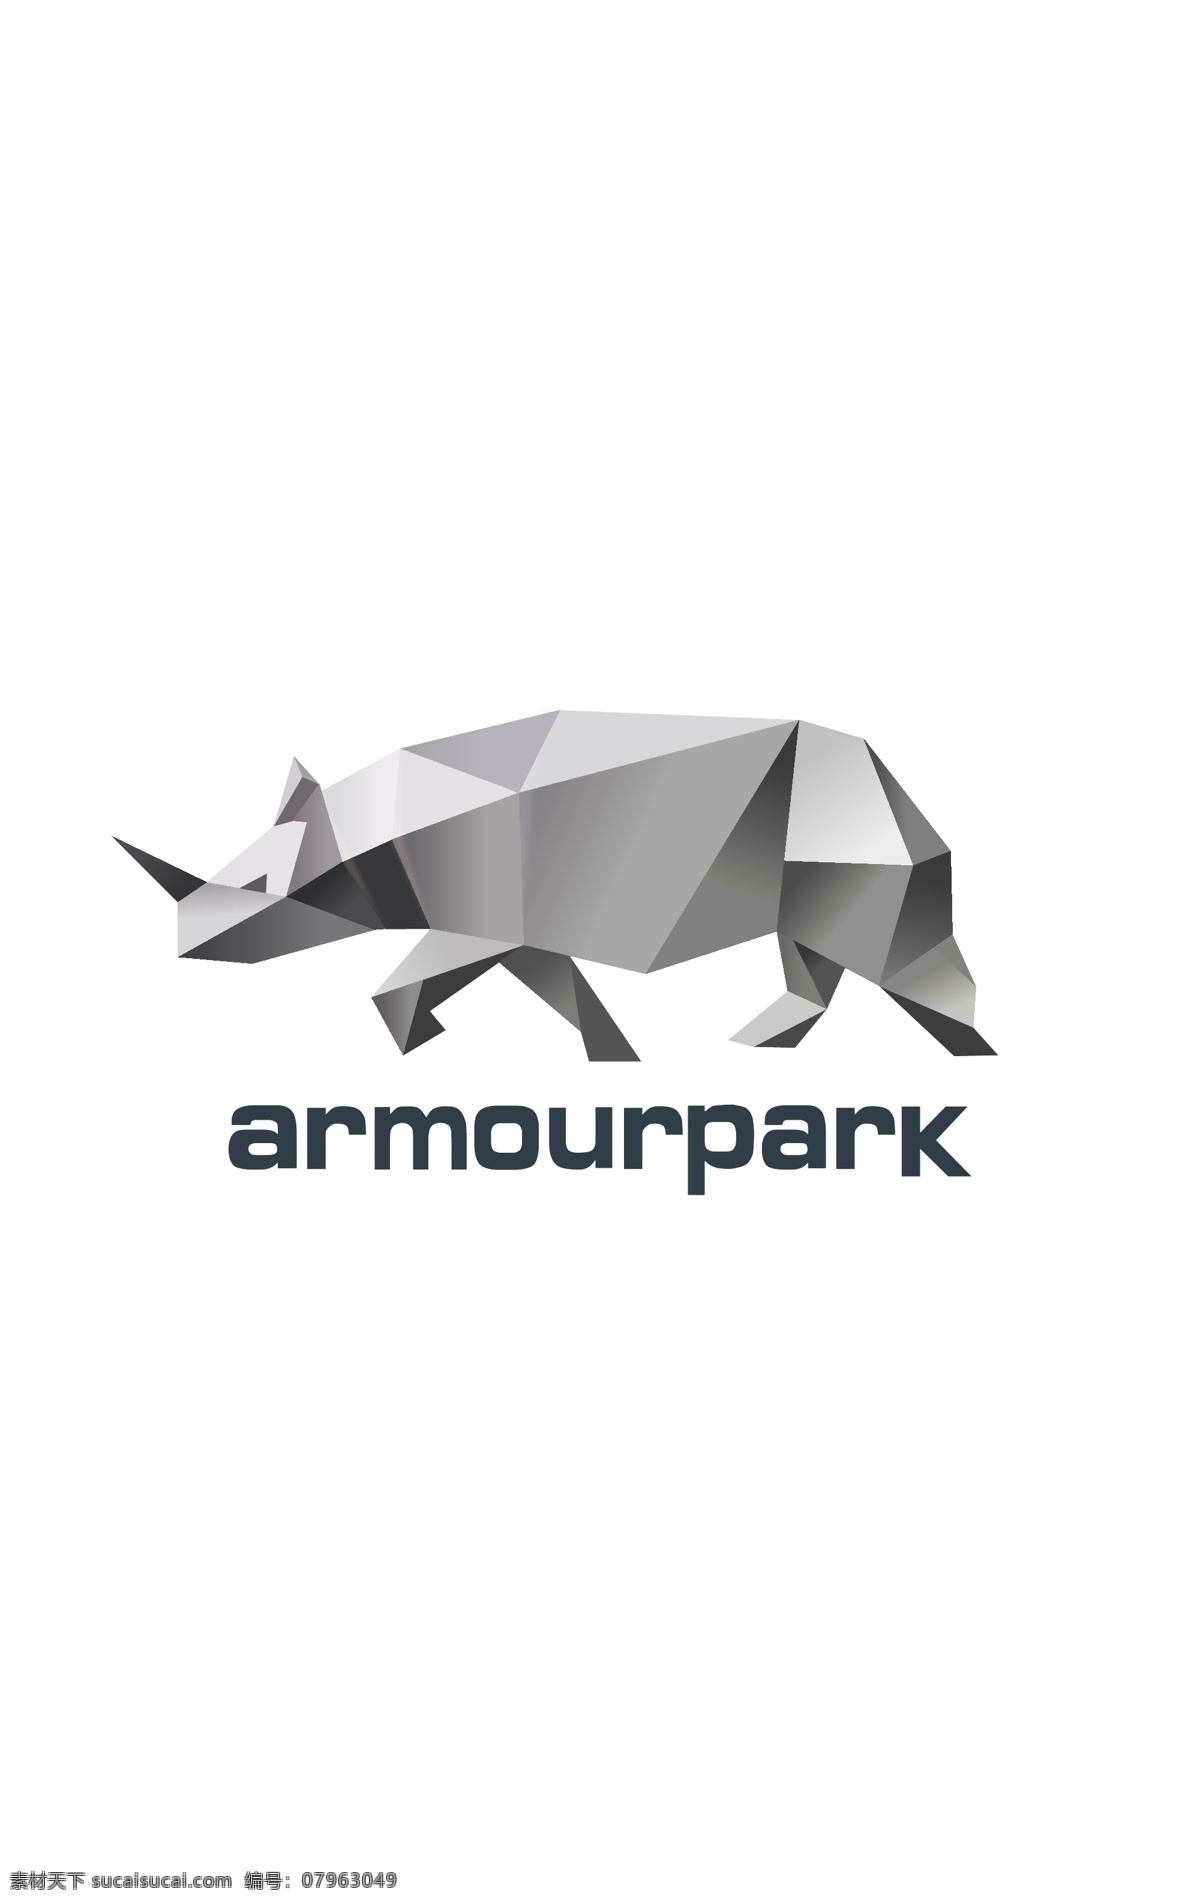 armourpark 立体牛 牛logo 矢量牛 立体矢量牛 logo设计